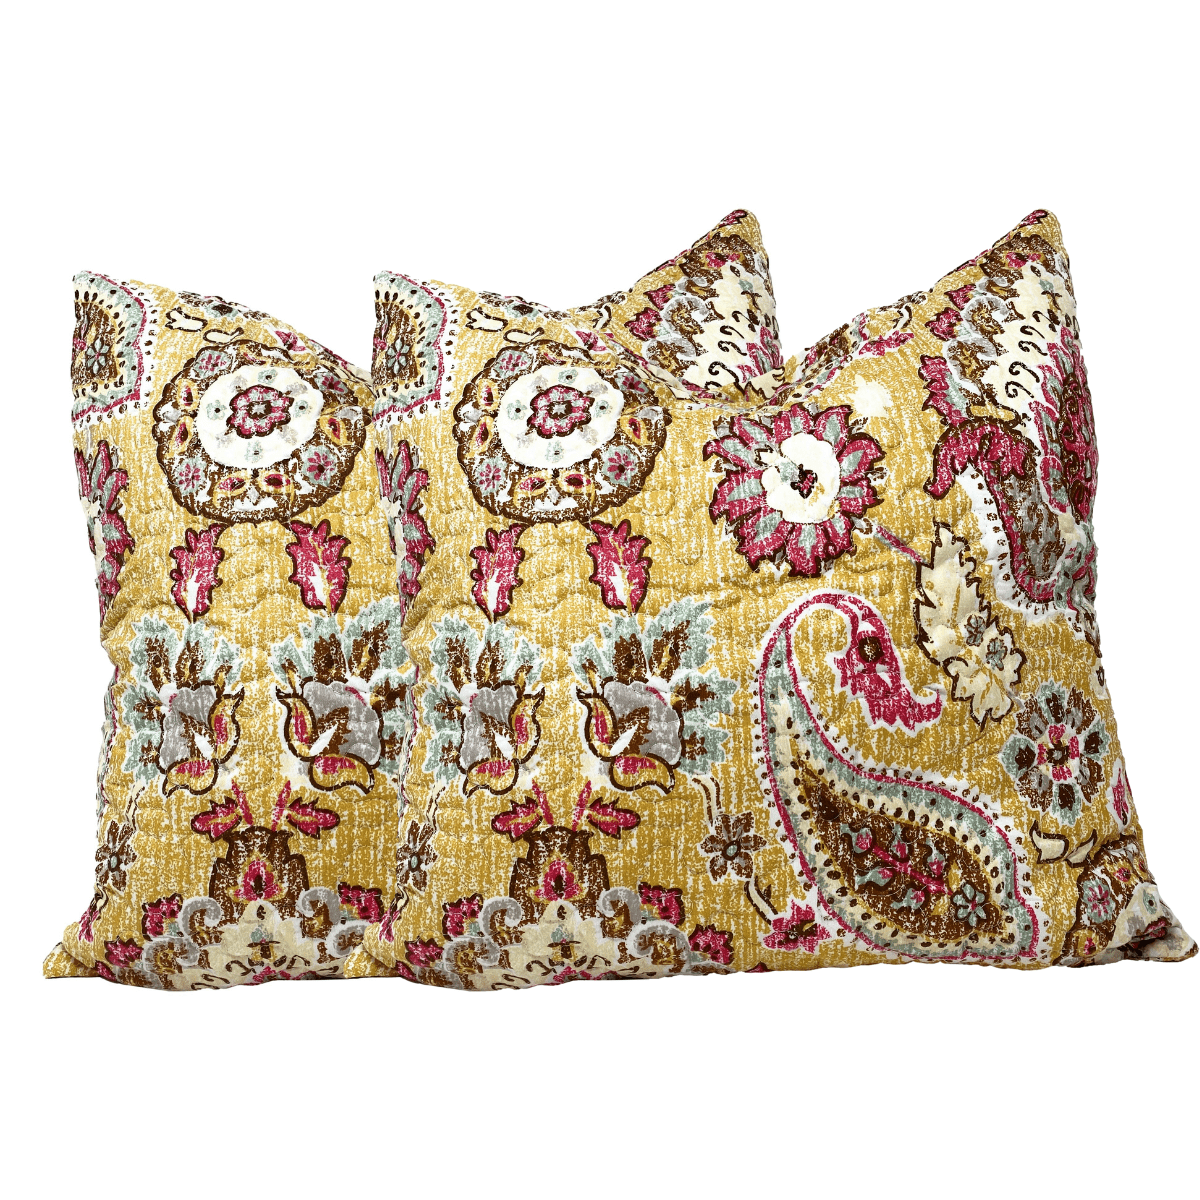 Tache Floral Paisley Damask Boho Chic Gold Royal Medallion Cushion Cover 2-Pieces (SD5357) - Tache Home Fashion